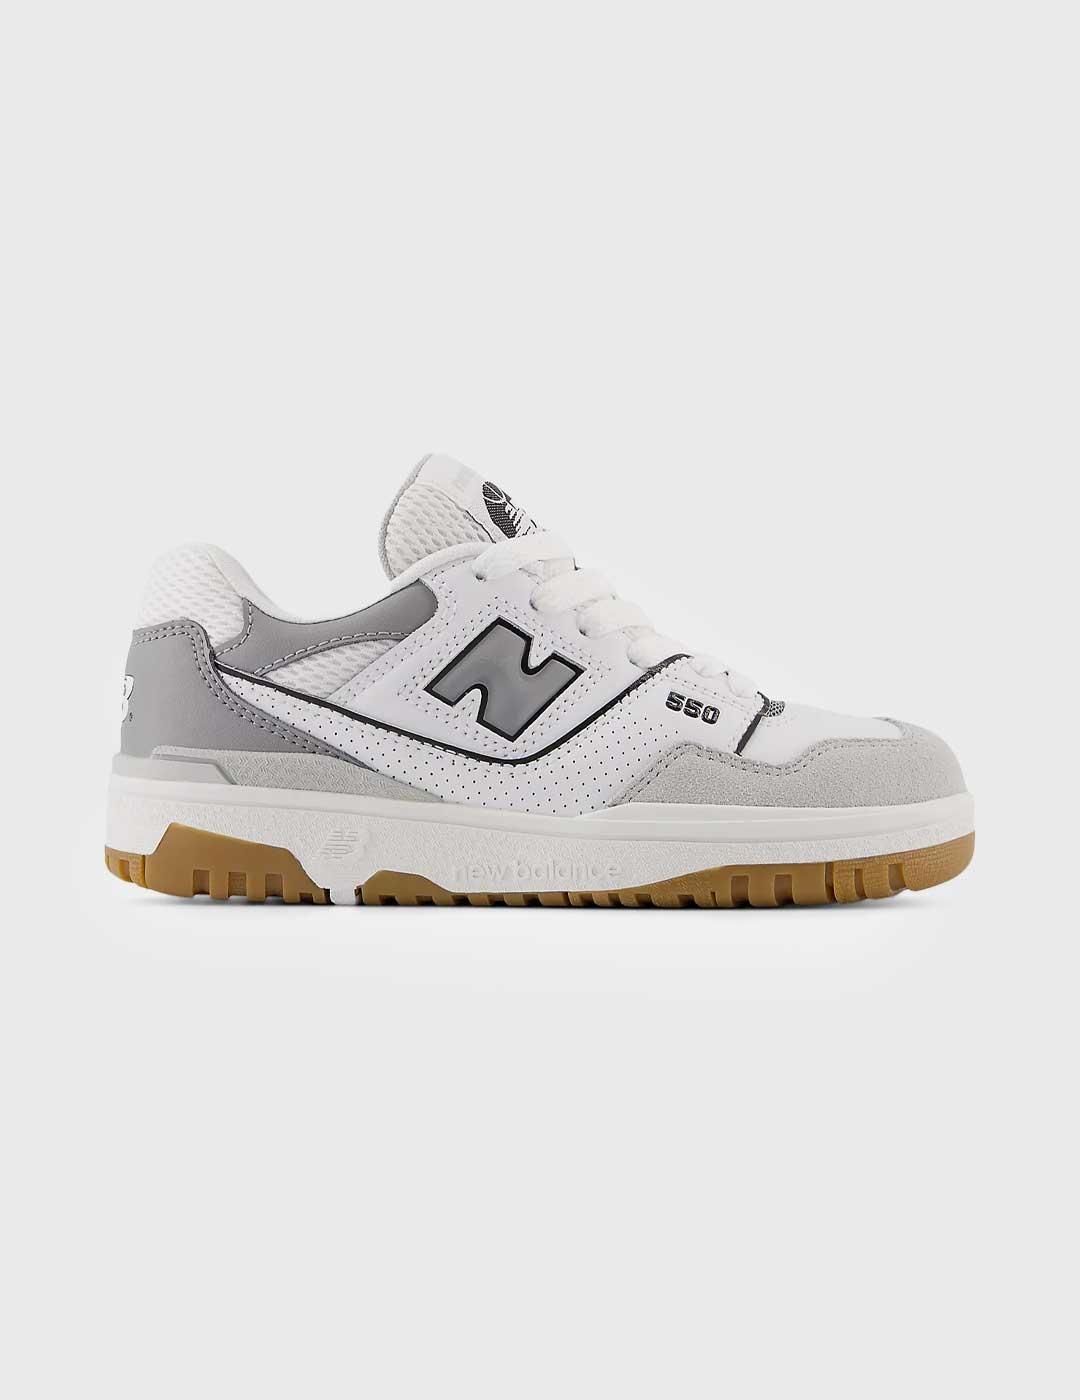 New Balance 550 Zapatillas infantiles grises y blancas